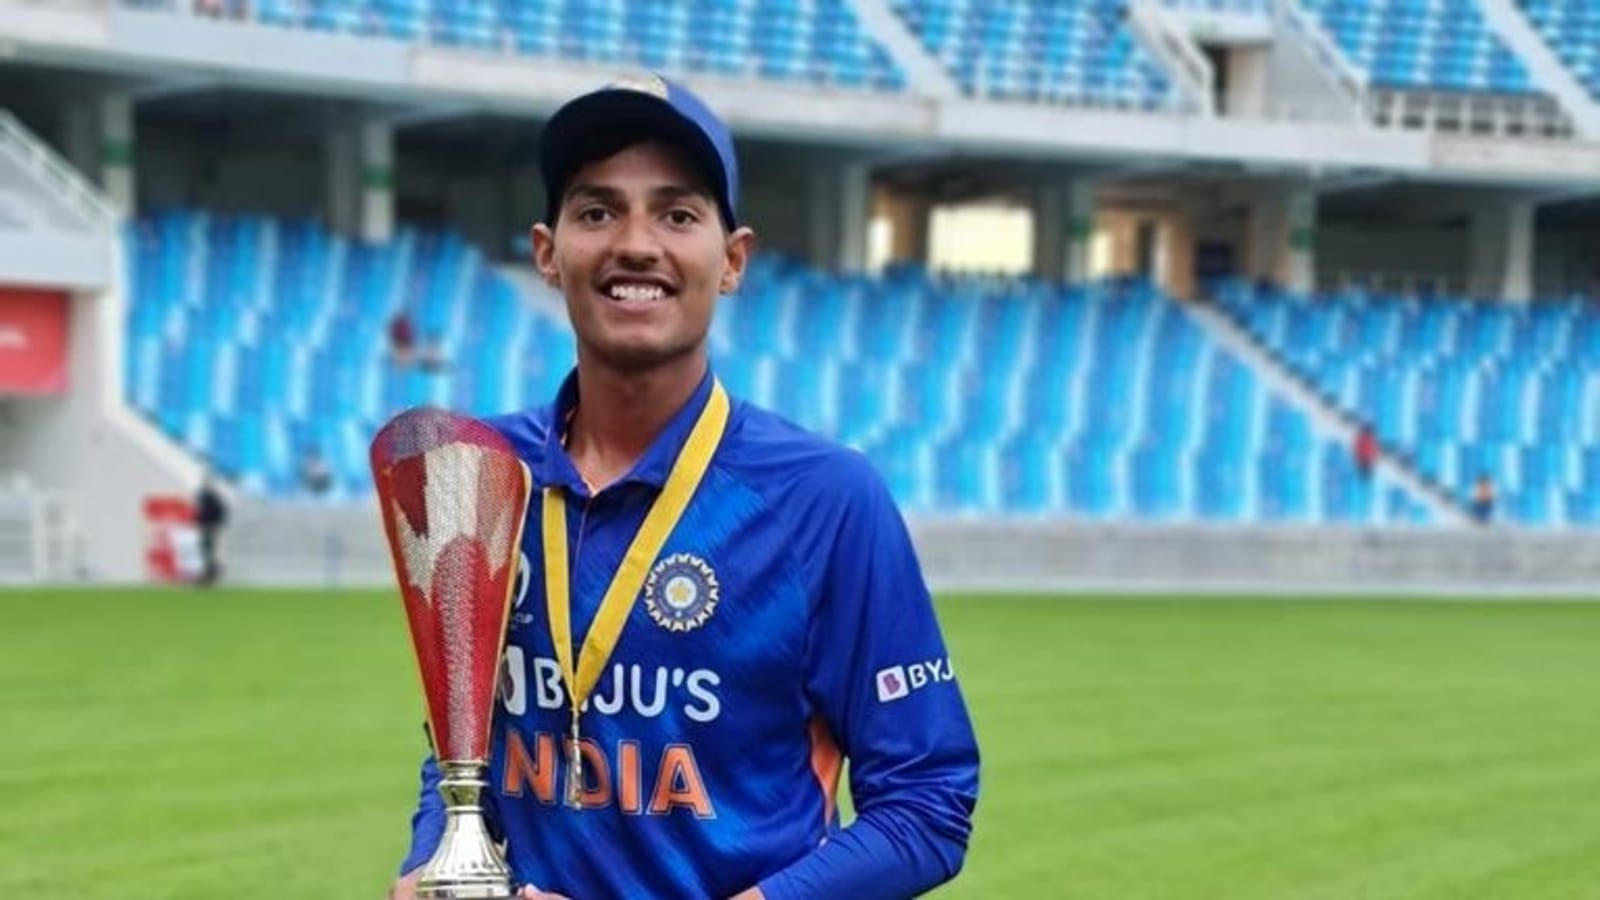 Meet Yash Dhull, India's U-19 captain from West Delhi who has shades of  Kohli | Cricket - Hindustan Times